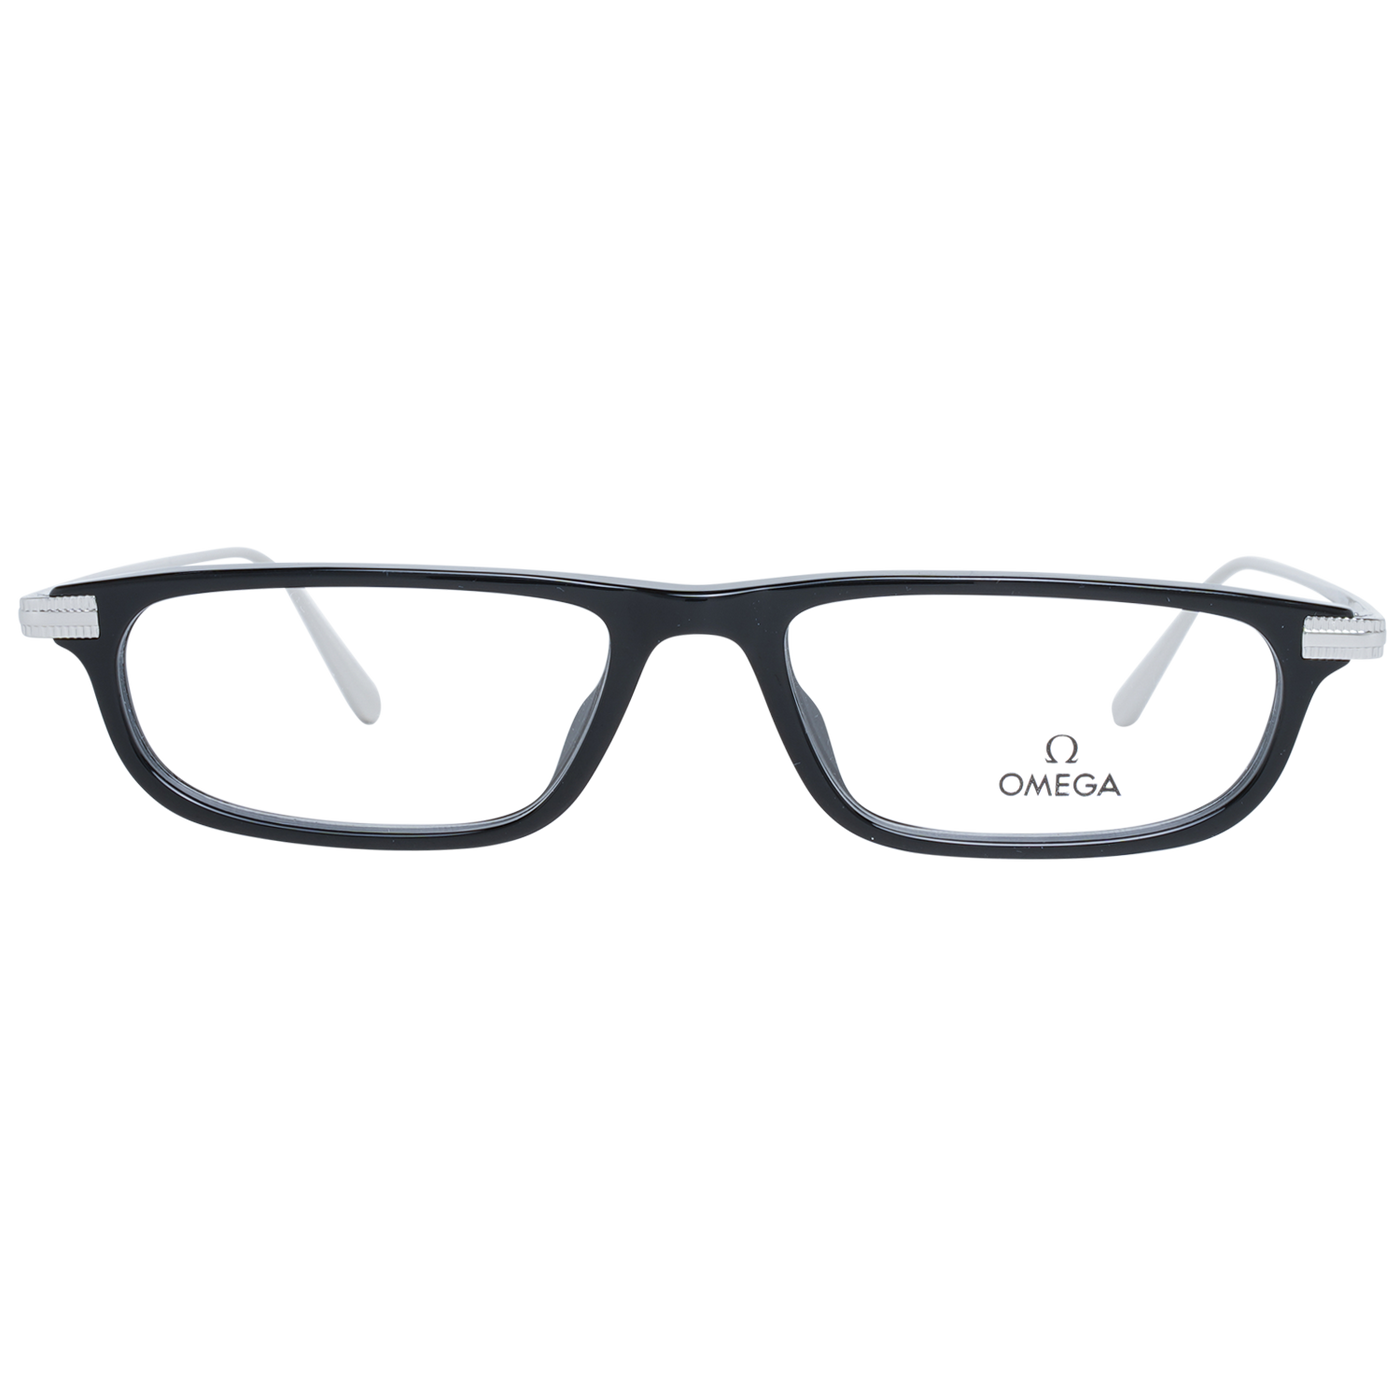 Omega Black Unisex Optical Frames